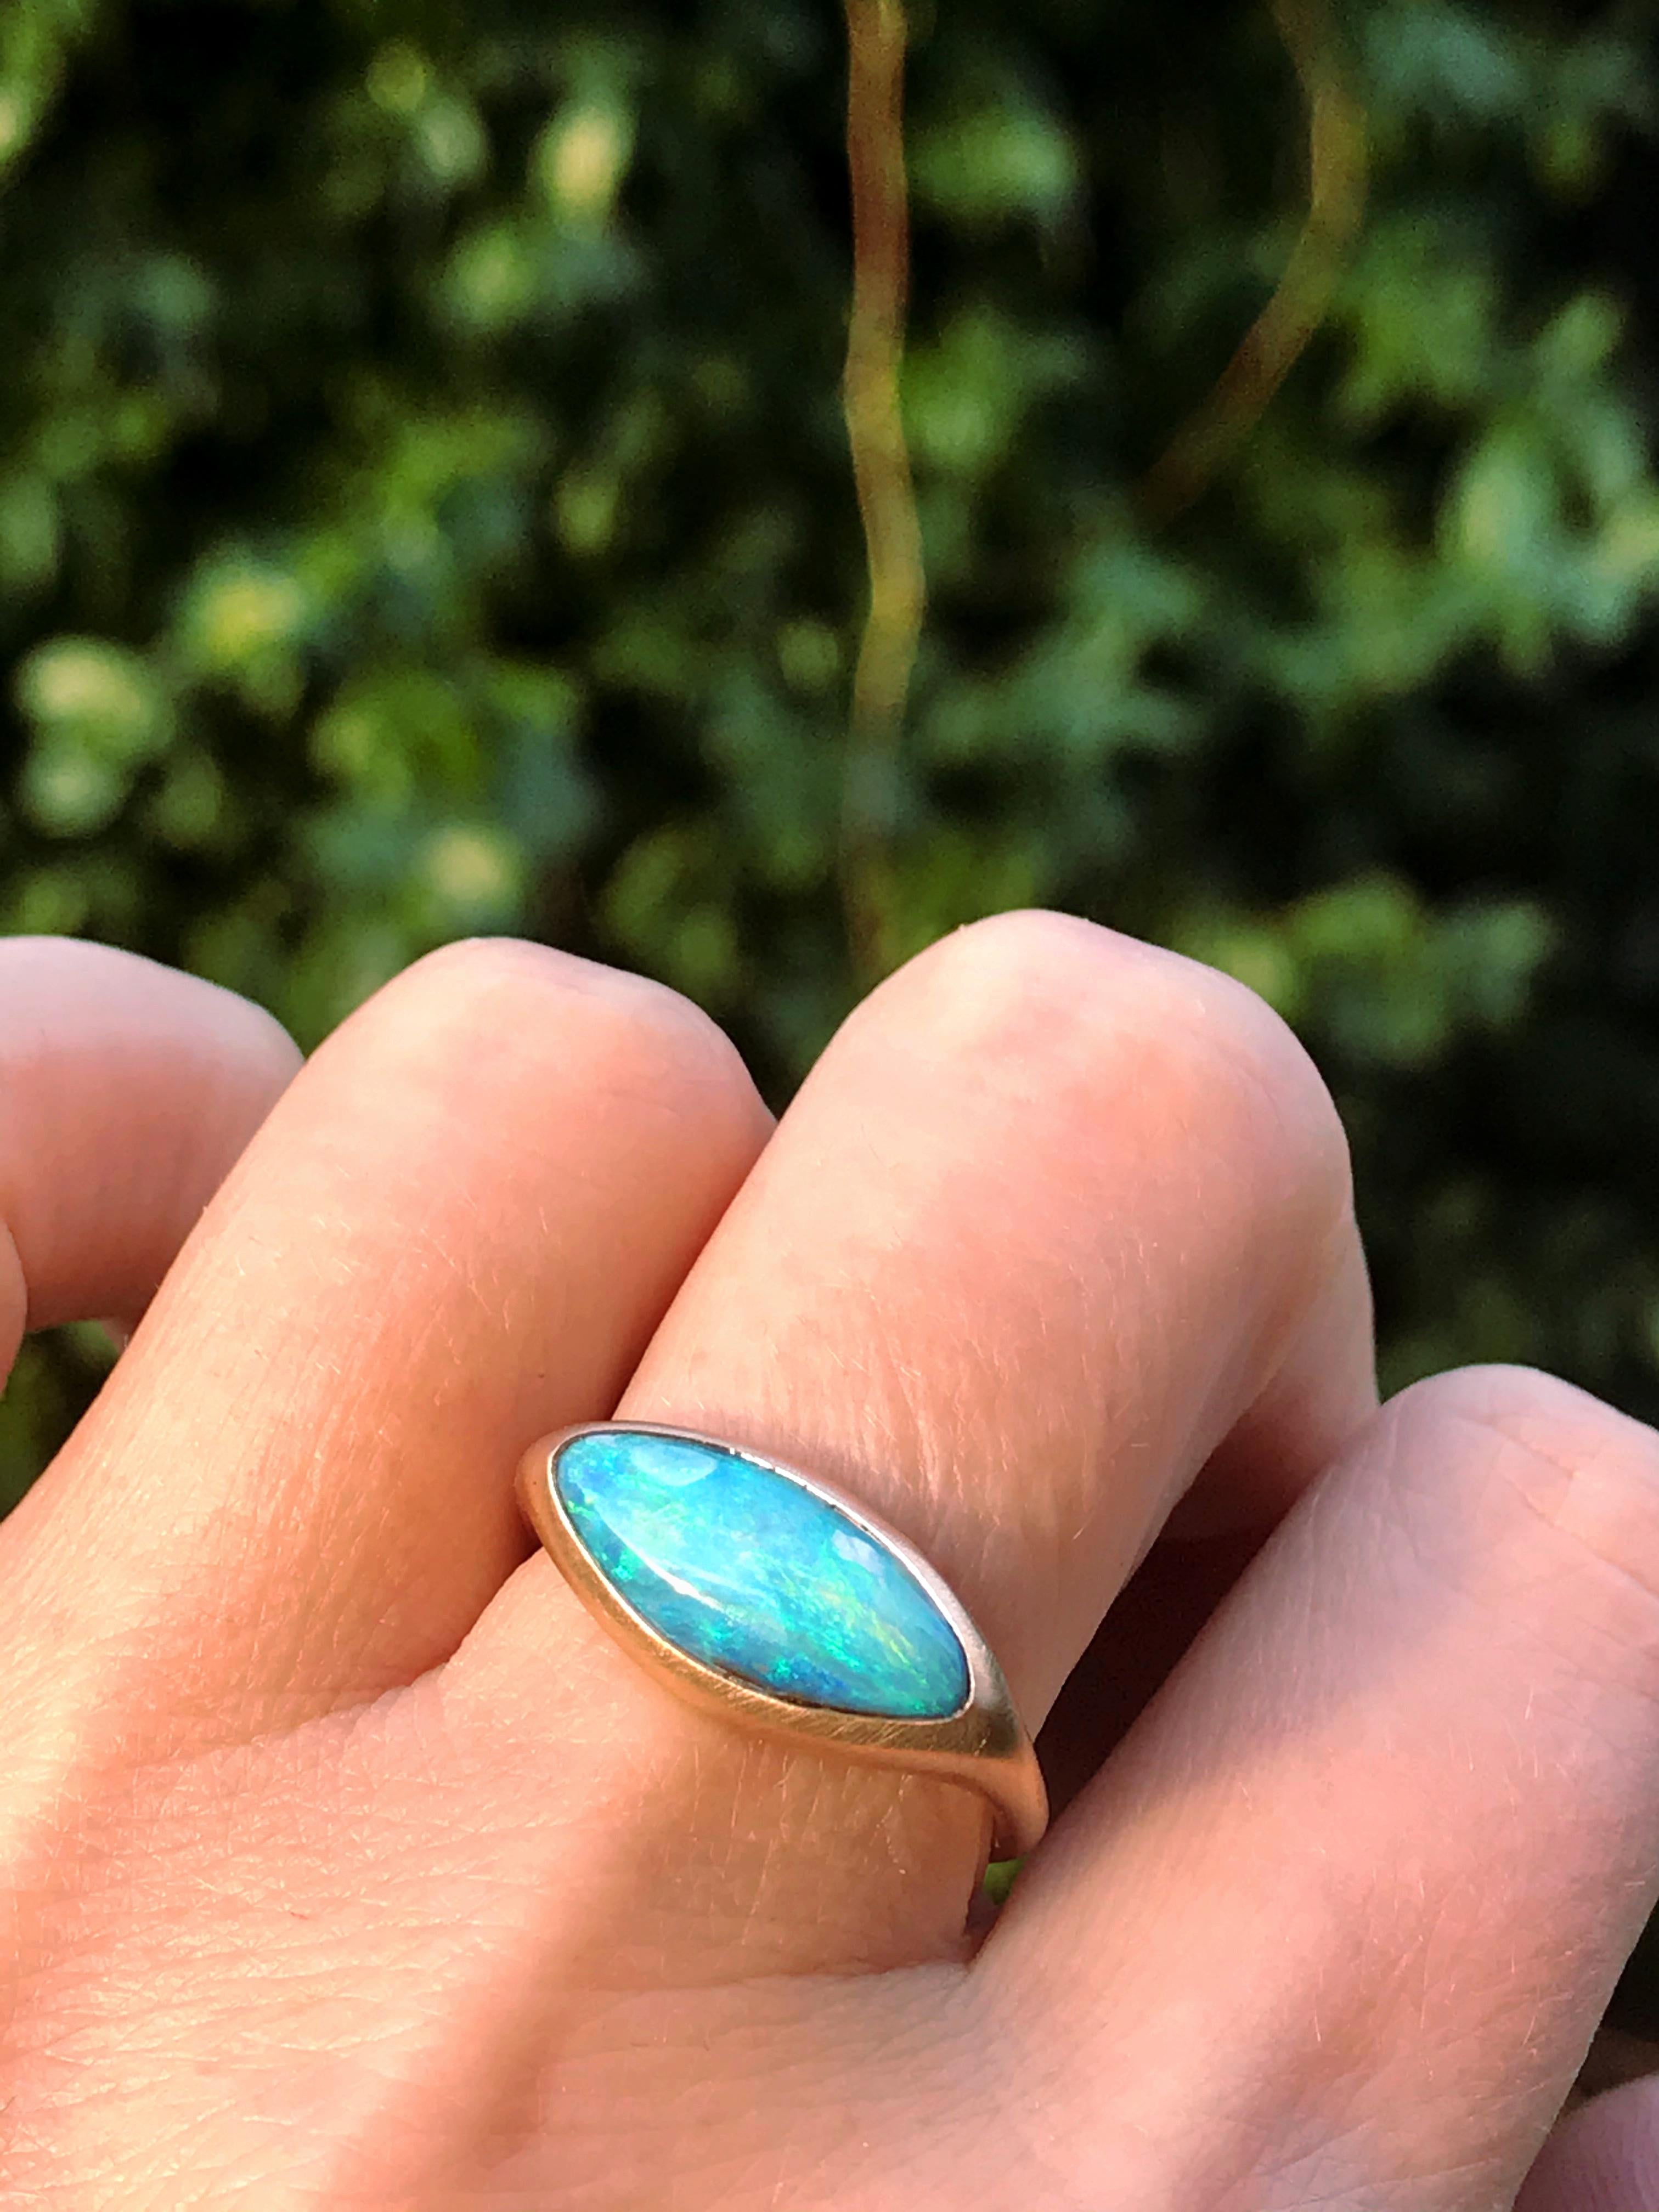 Dalben design One of a kind 18 kt rose gold ring with a 3,02 carat bezel-set deep light blue navette shape Australian Boulder Opal  .  
Ring size 7 1/4 - EU 55 re-sizable .  
Bezel setting dimension:  
max width 18,7 mm,  
max height 8,7 mm. 
The